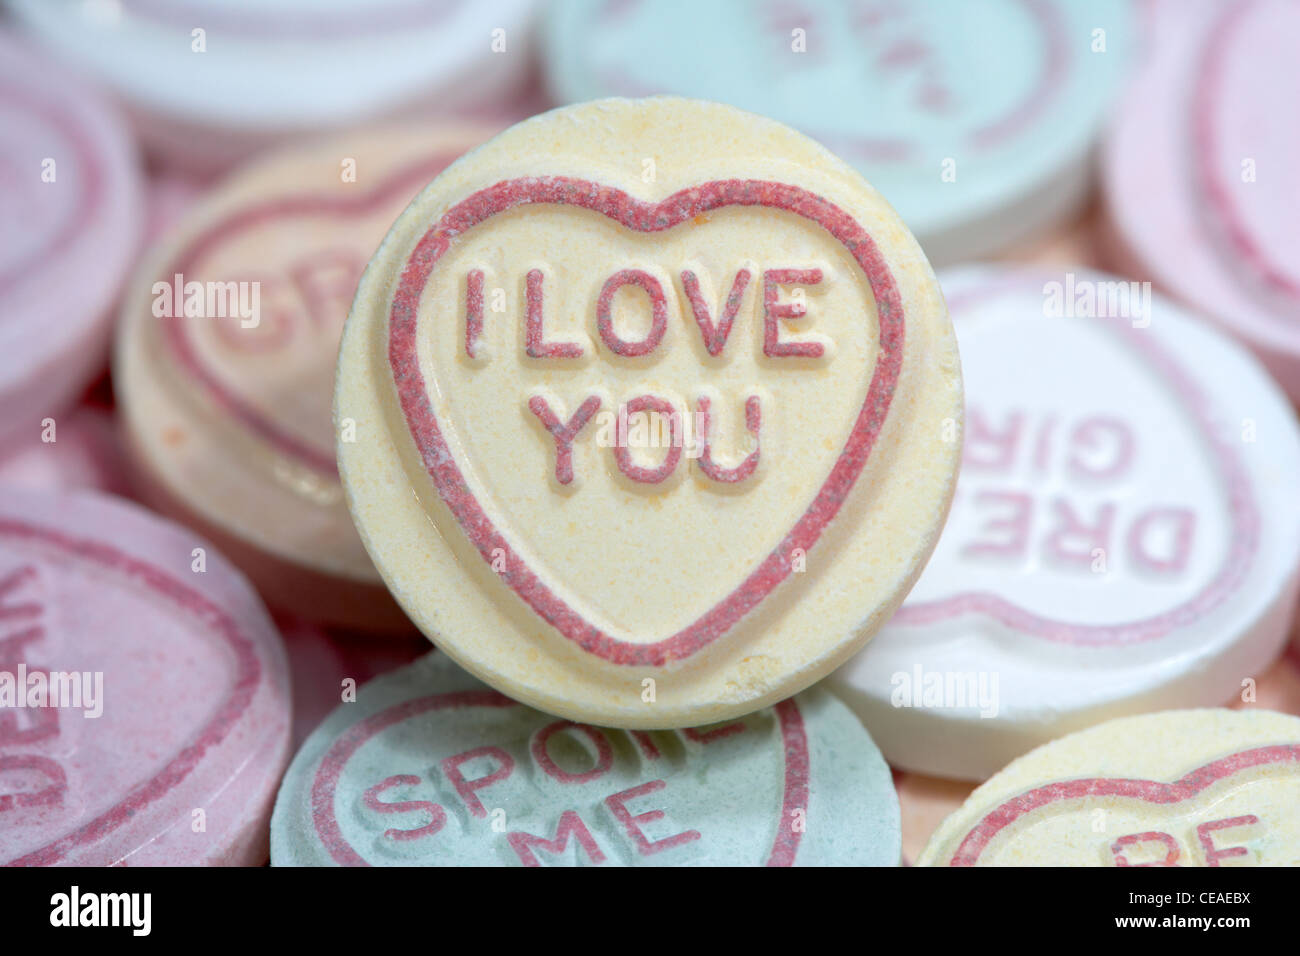 I love you amongst love heart sweets Stock Photo